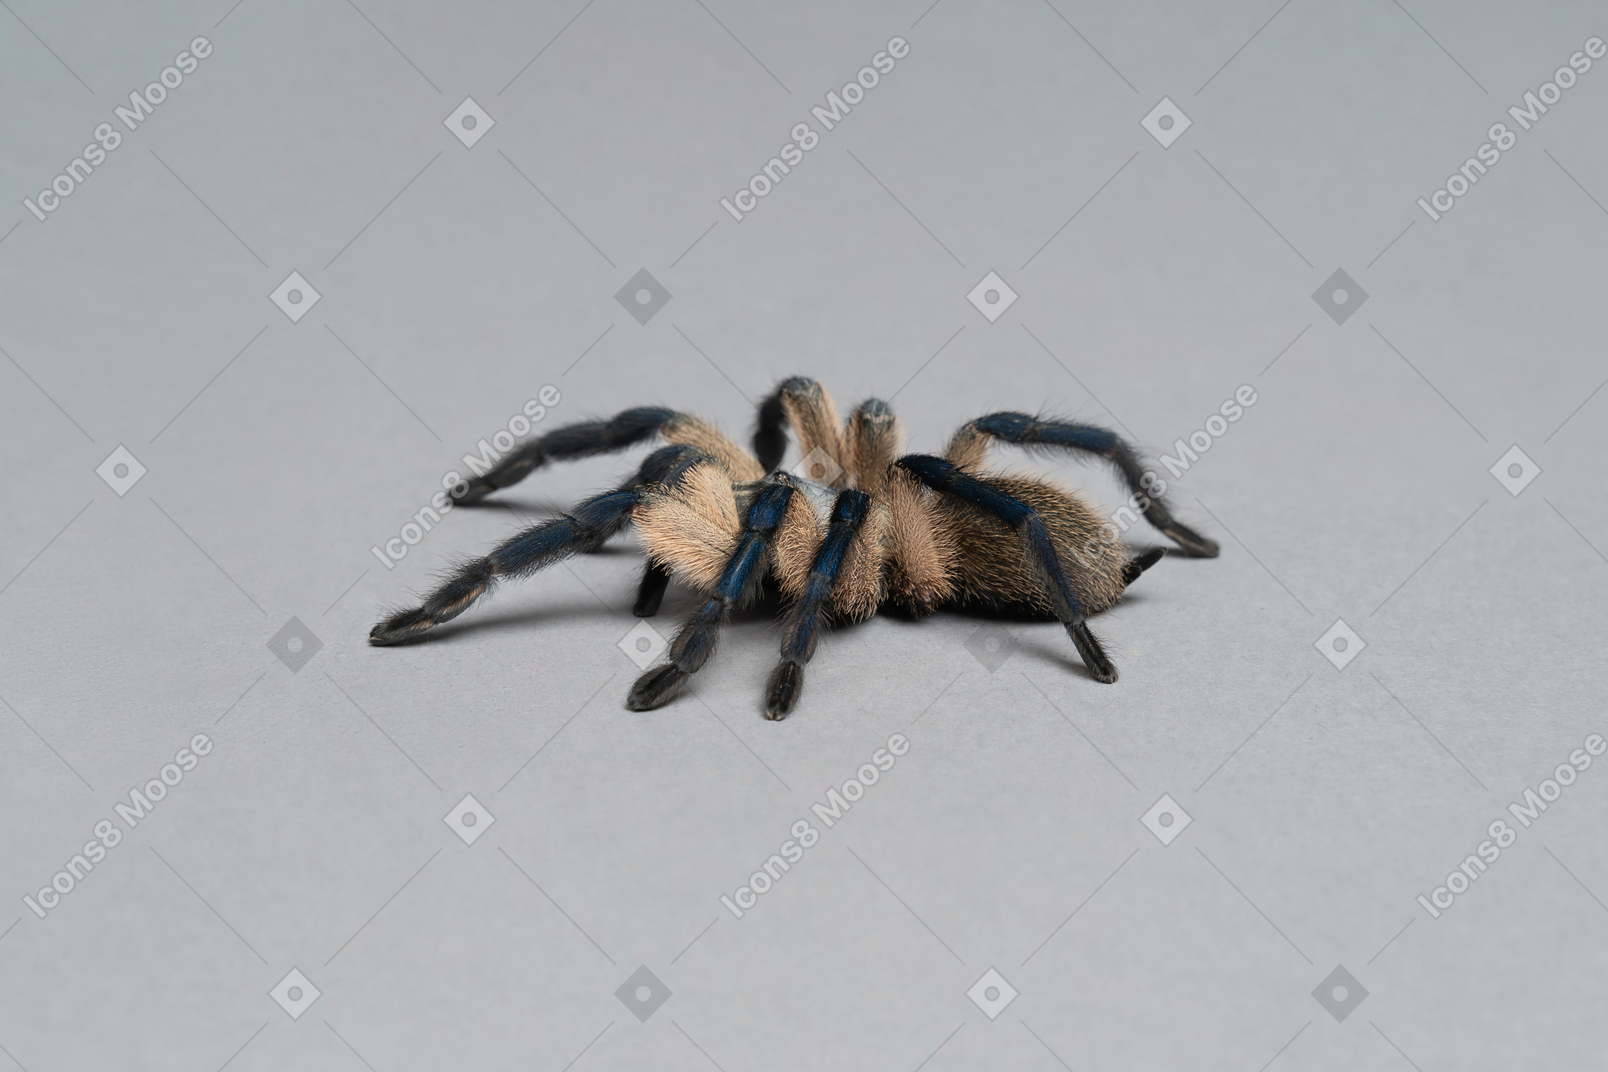 A black and gray tarantula